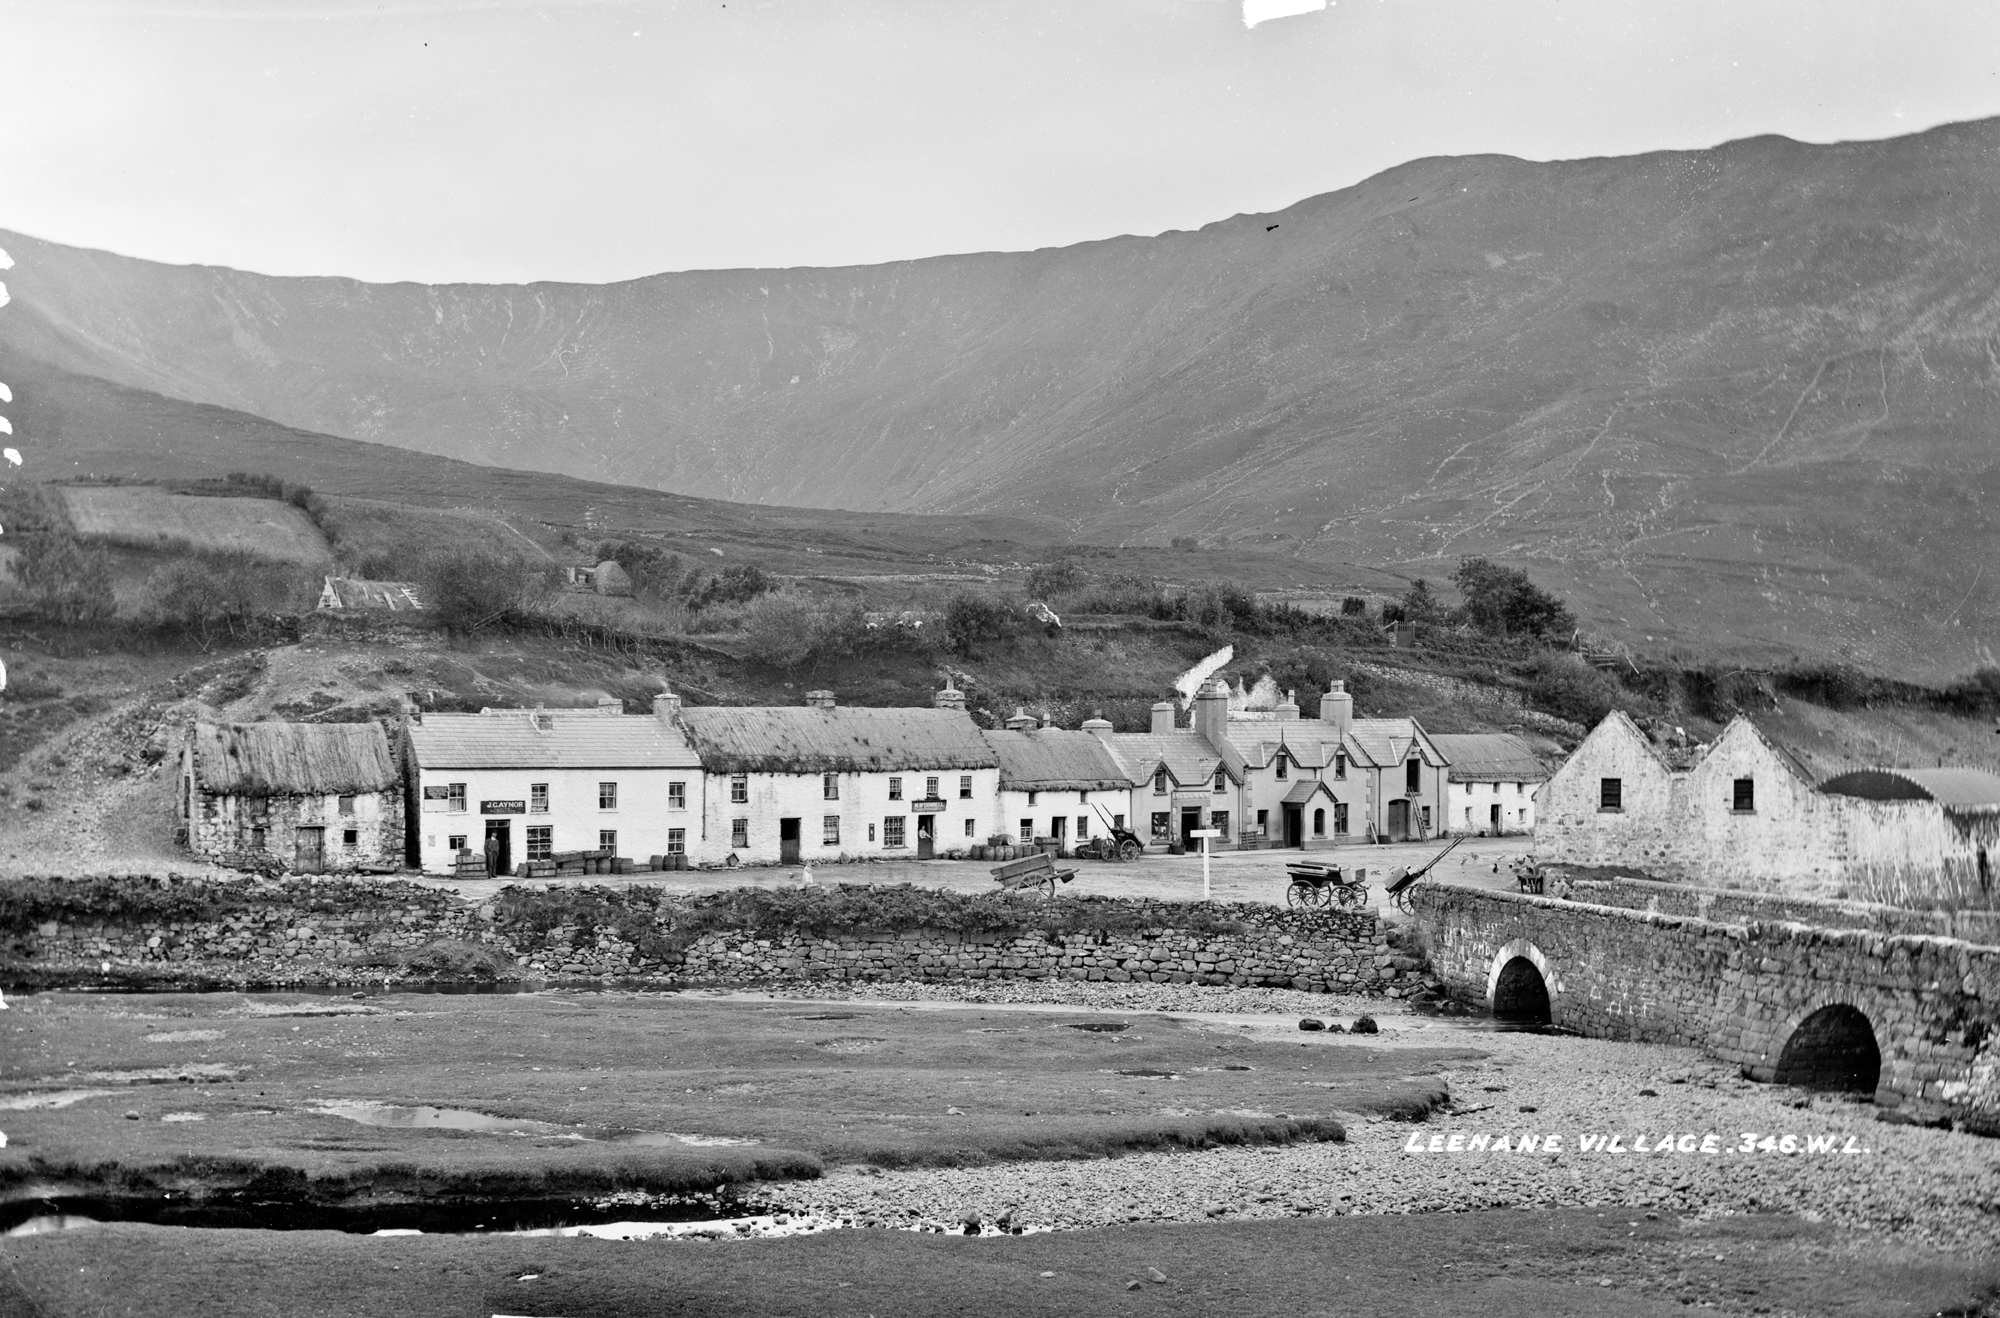 Village of Leenane, County Galway